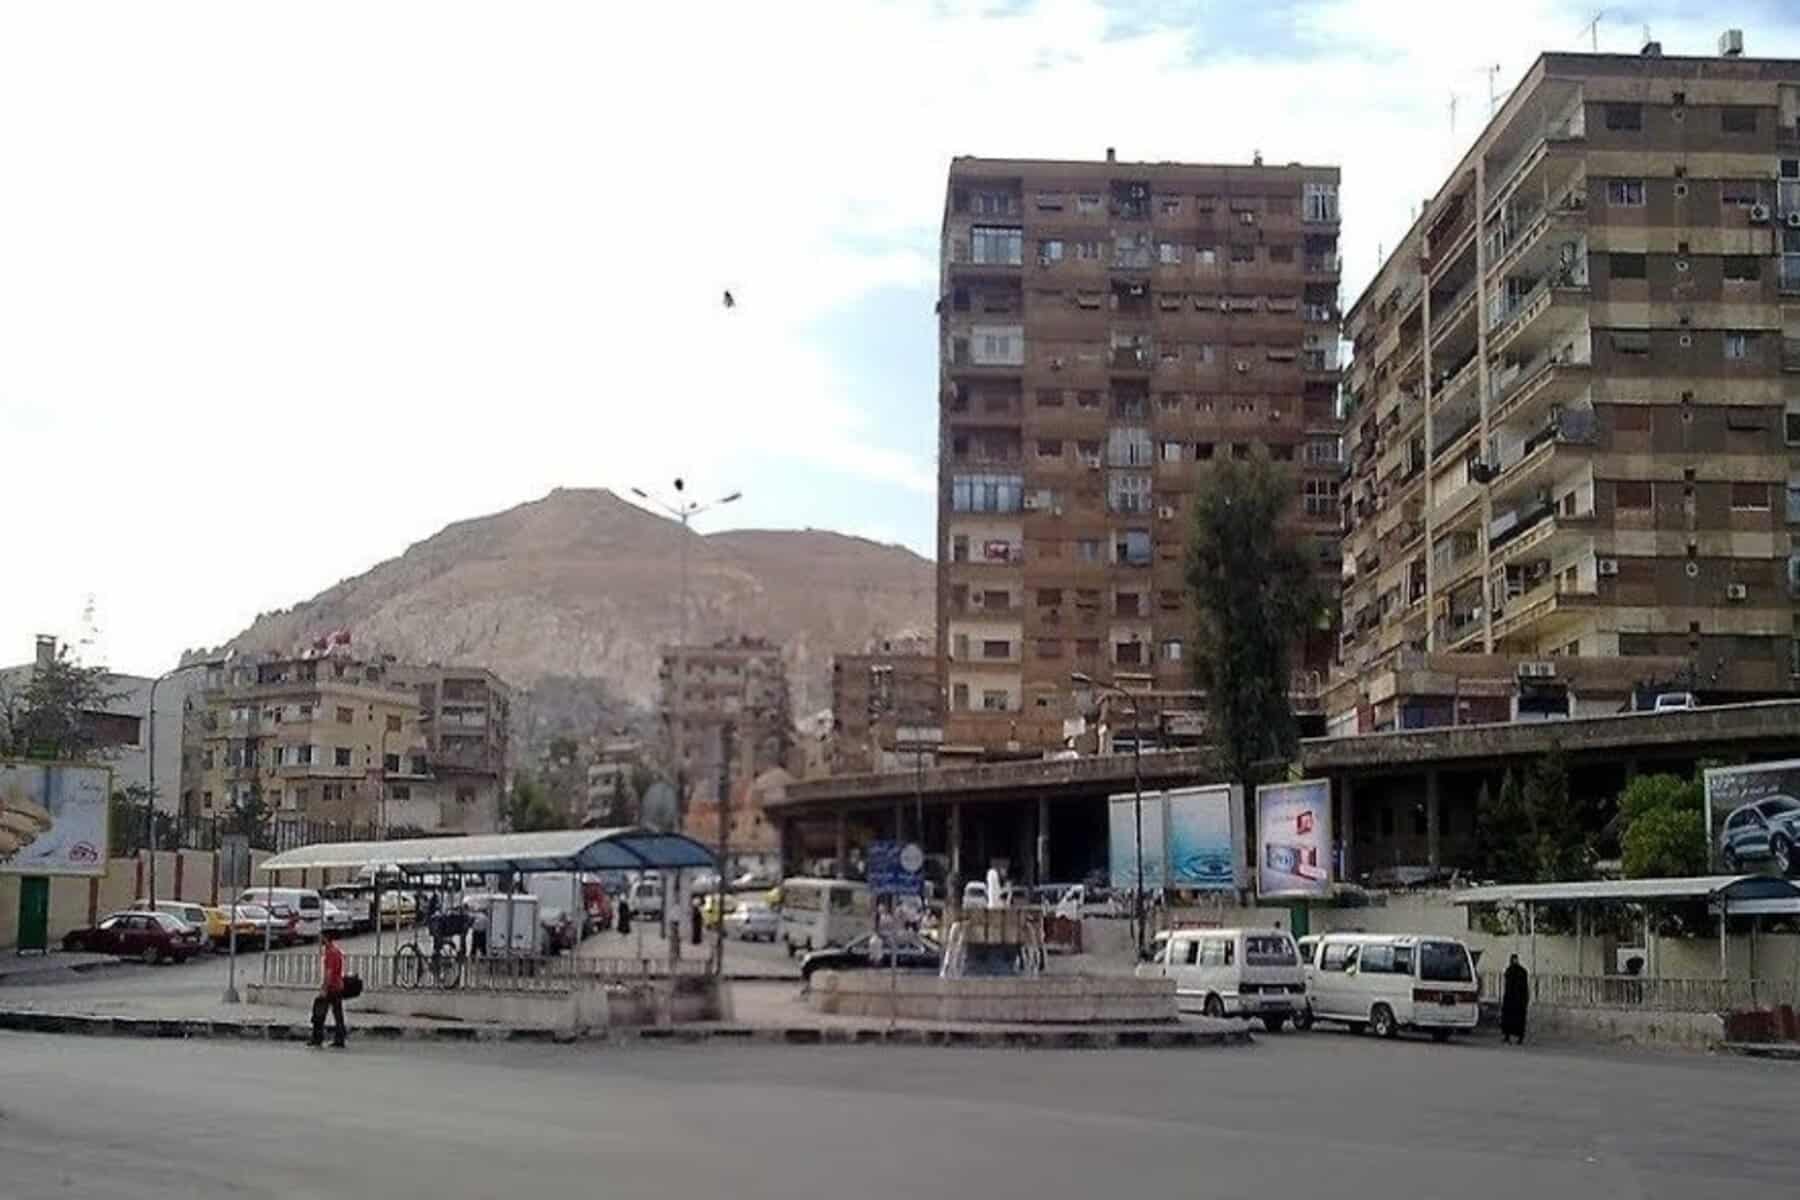  alarabtrend.com جريمة مروعة في العاصمة السورية دمشق ضجت بها منصات التواصل في سوريا 